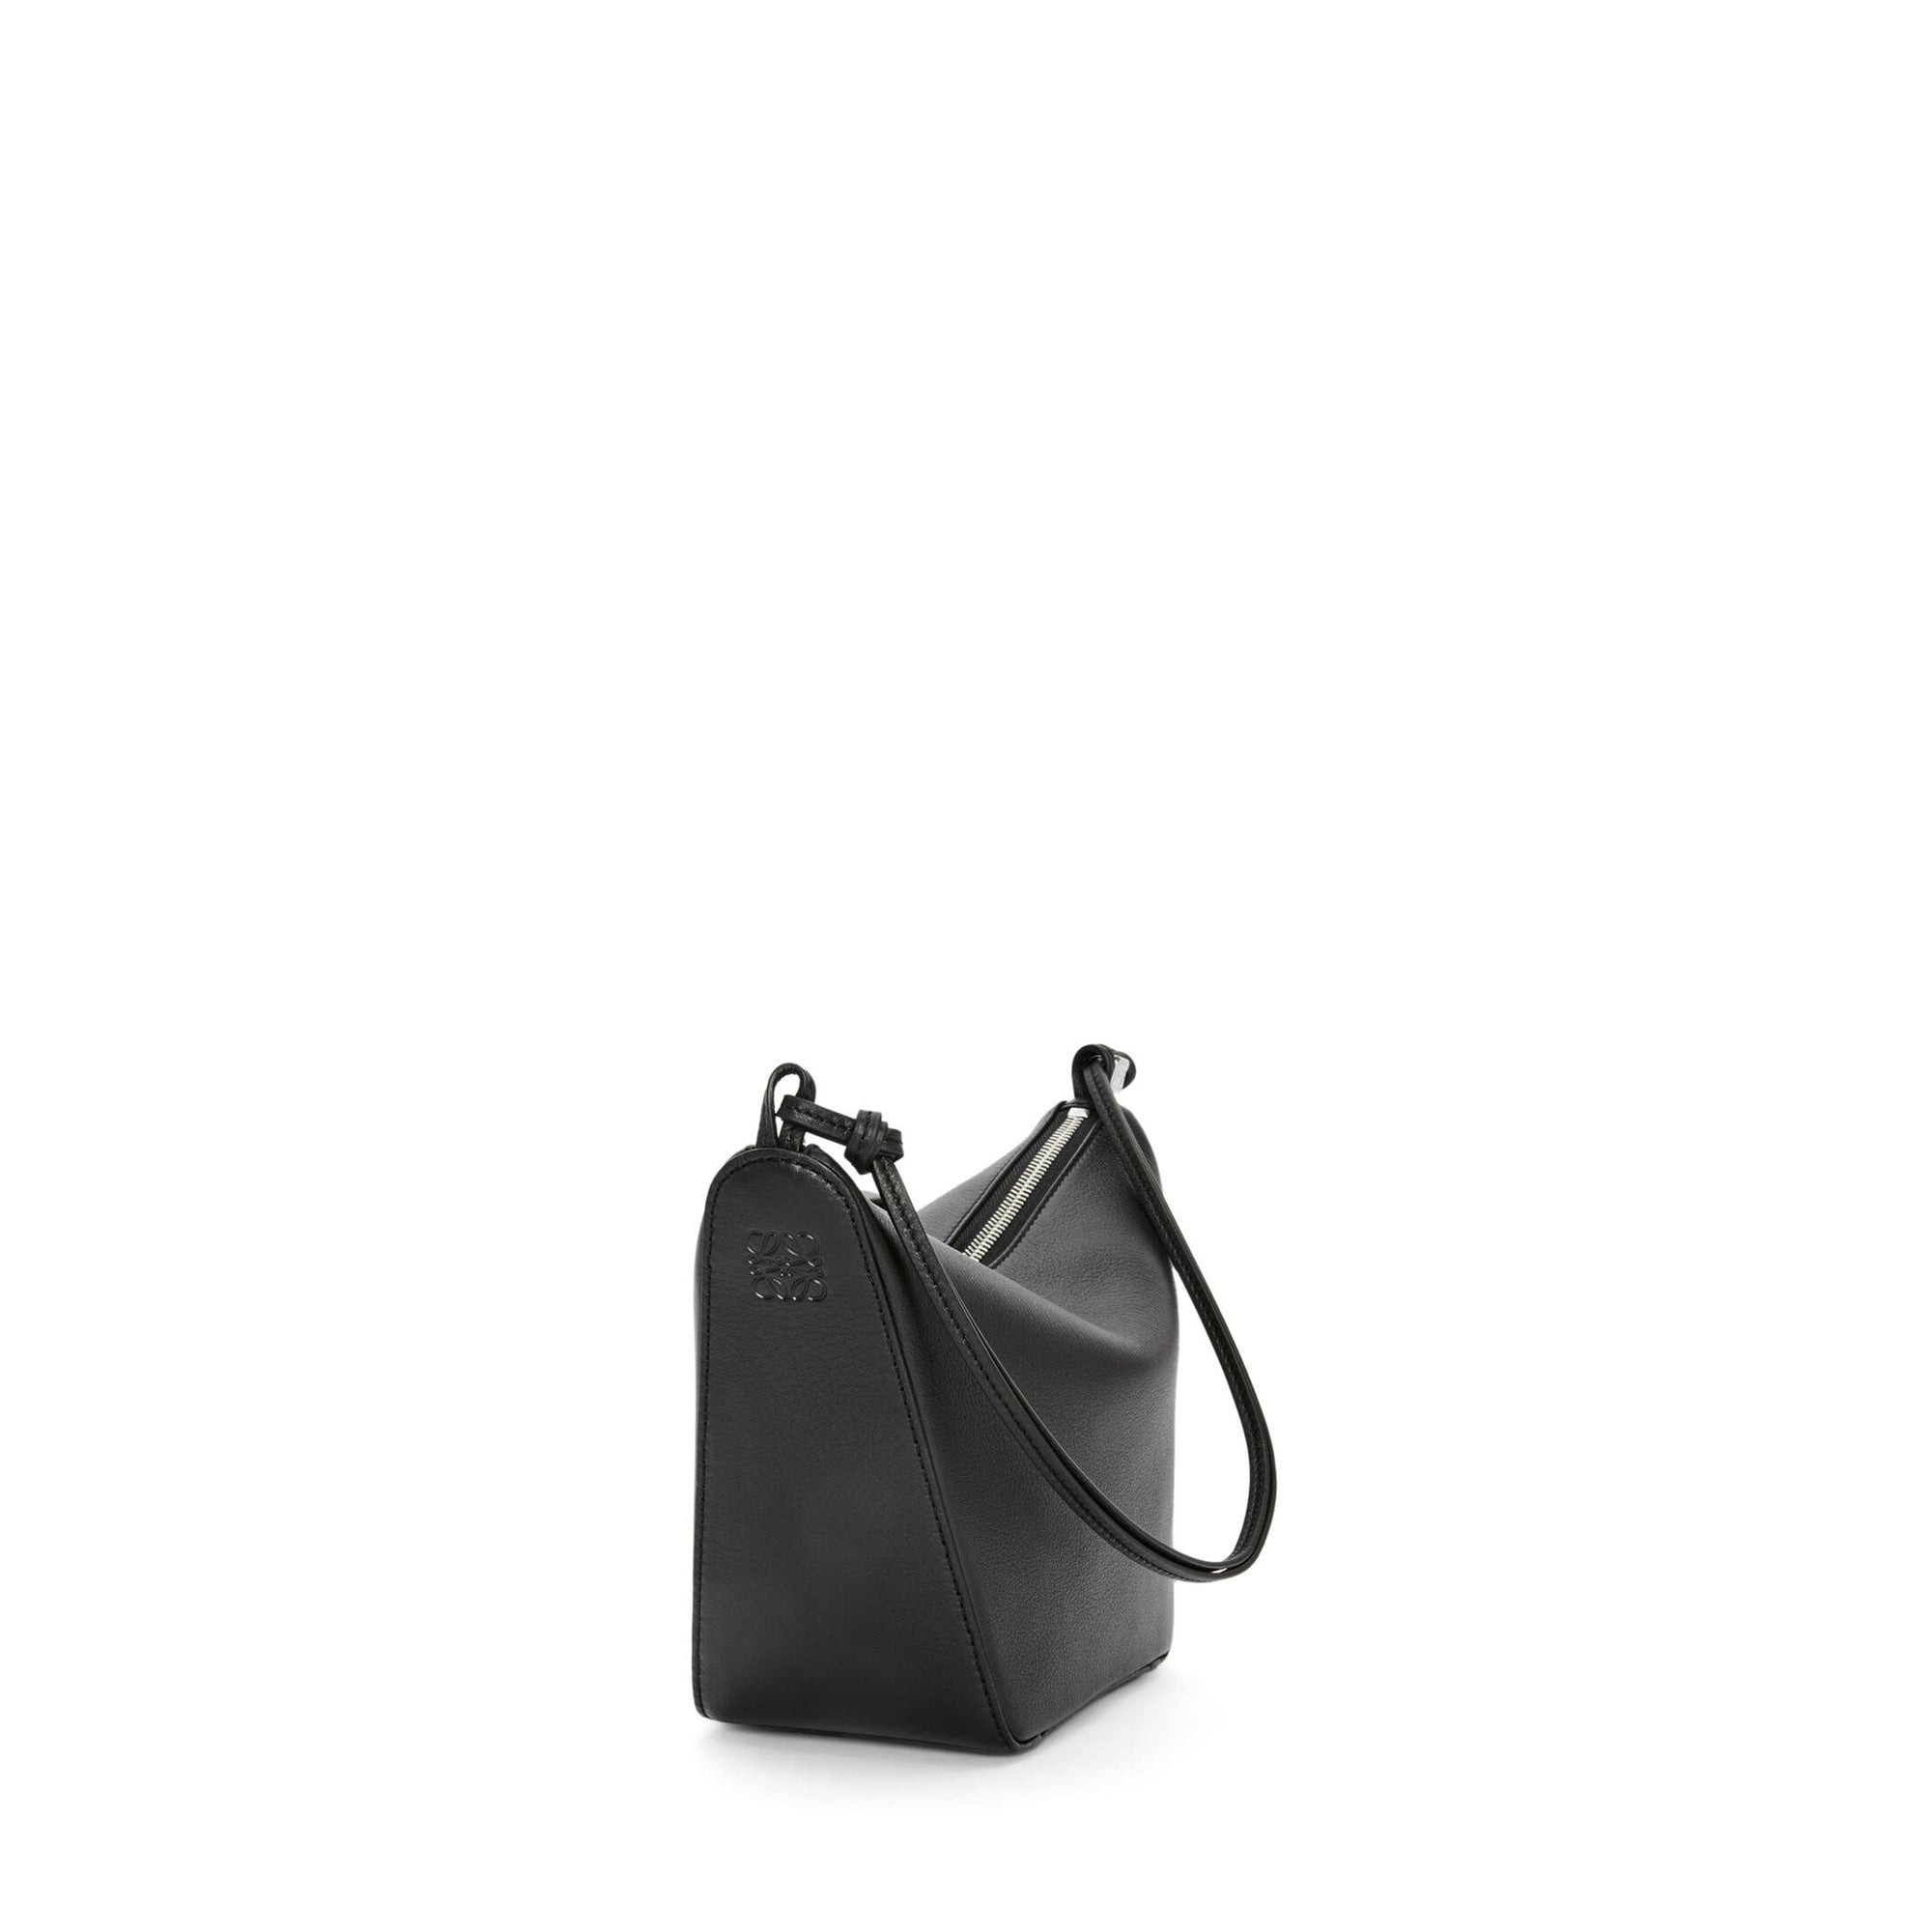 Loewe - Women’s Mini Hammock Bag  - (Black) view 4